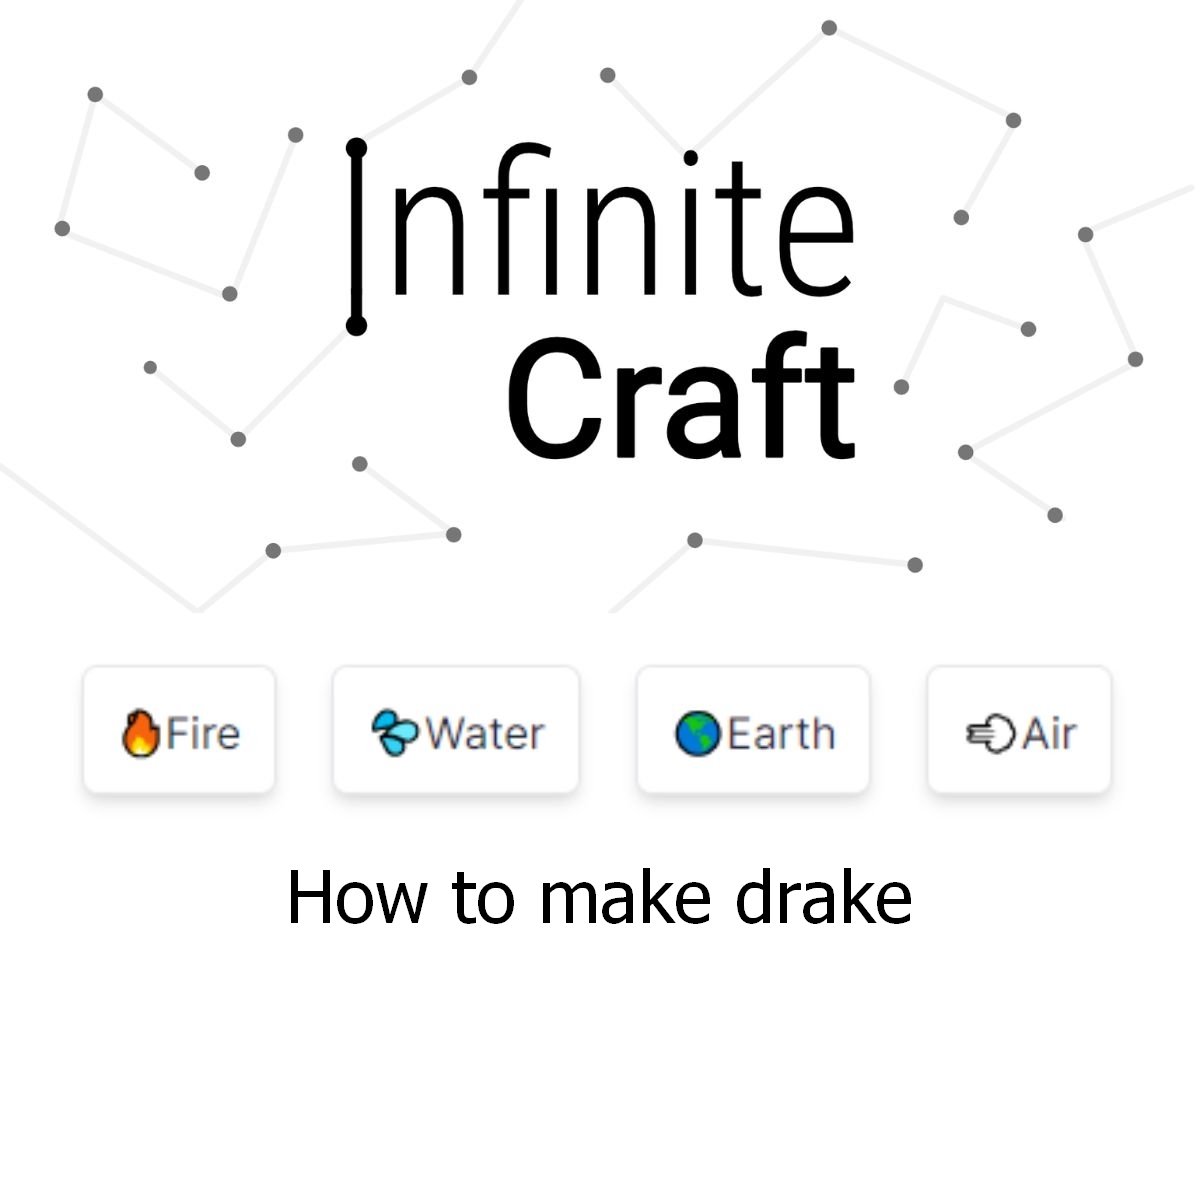 how to make drake in infinite craft